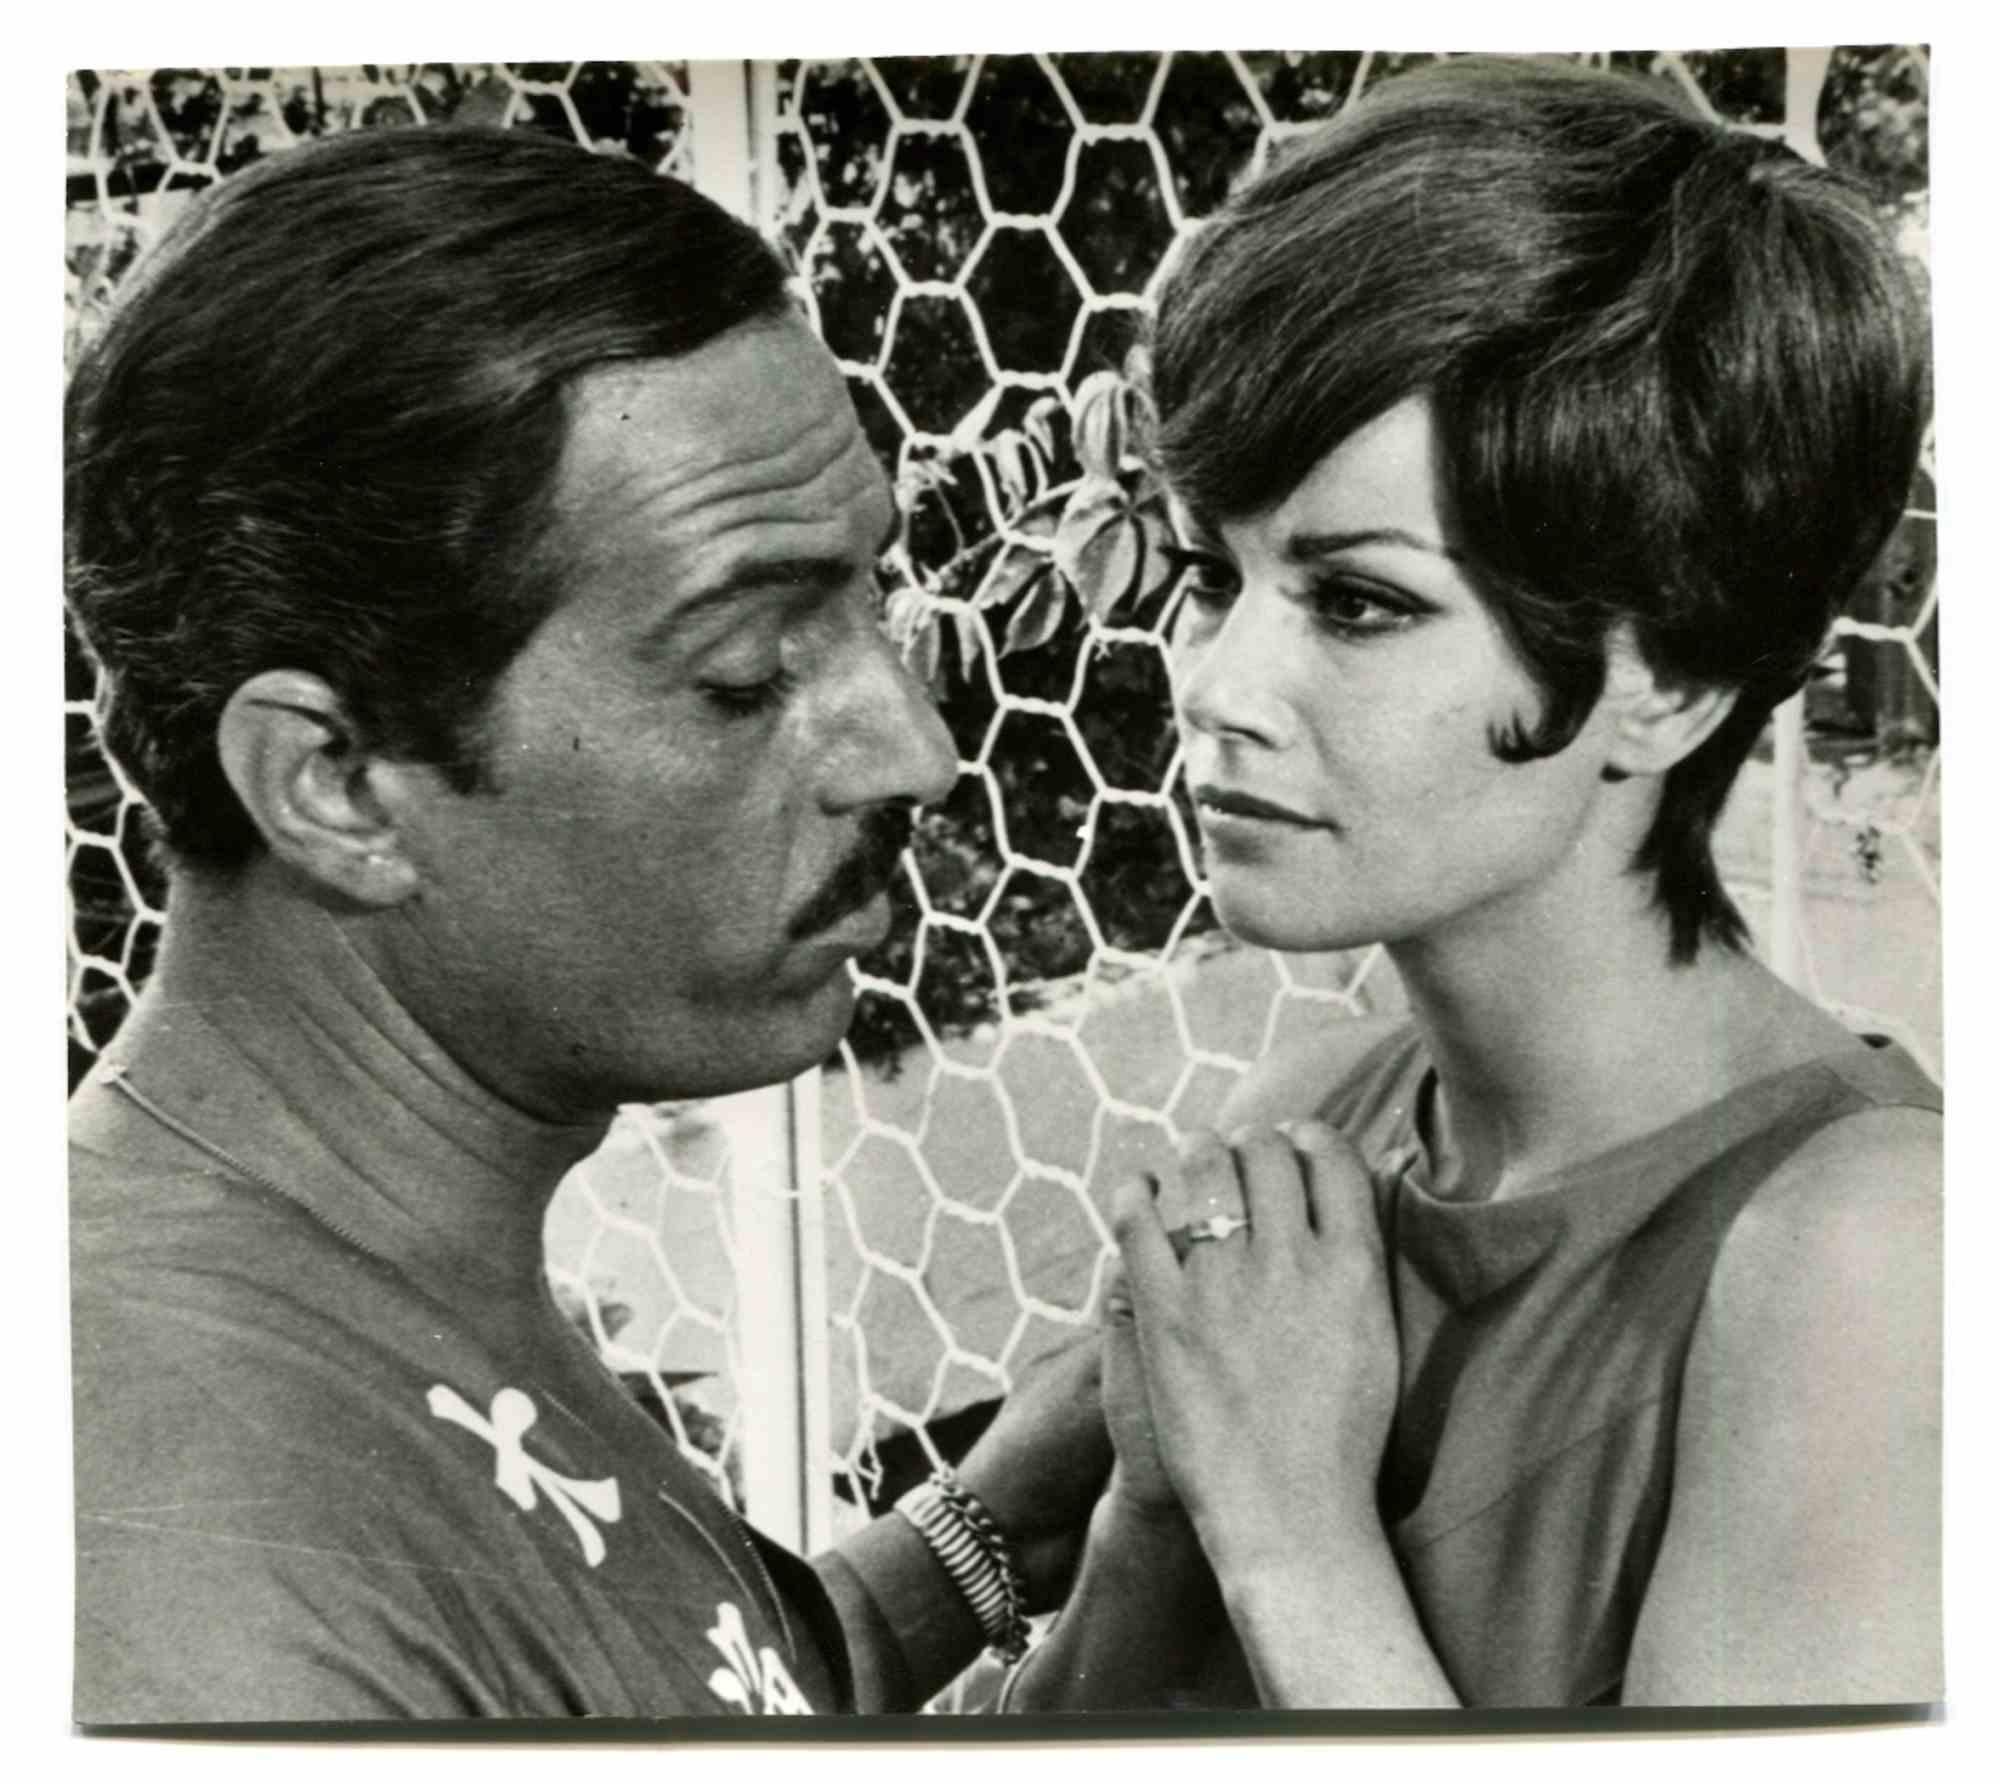 Unknown Portrait Photograph - Photo of Nino Manfredi  and Senta Berger- Photo - 1960s